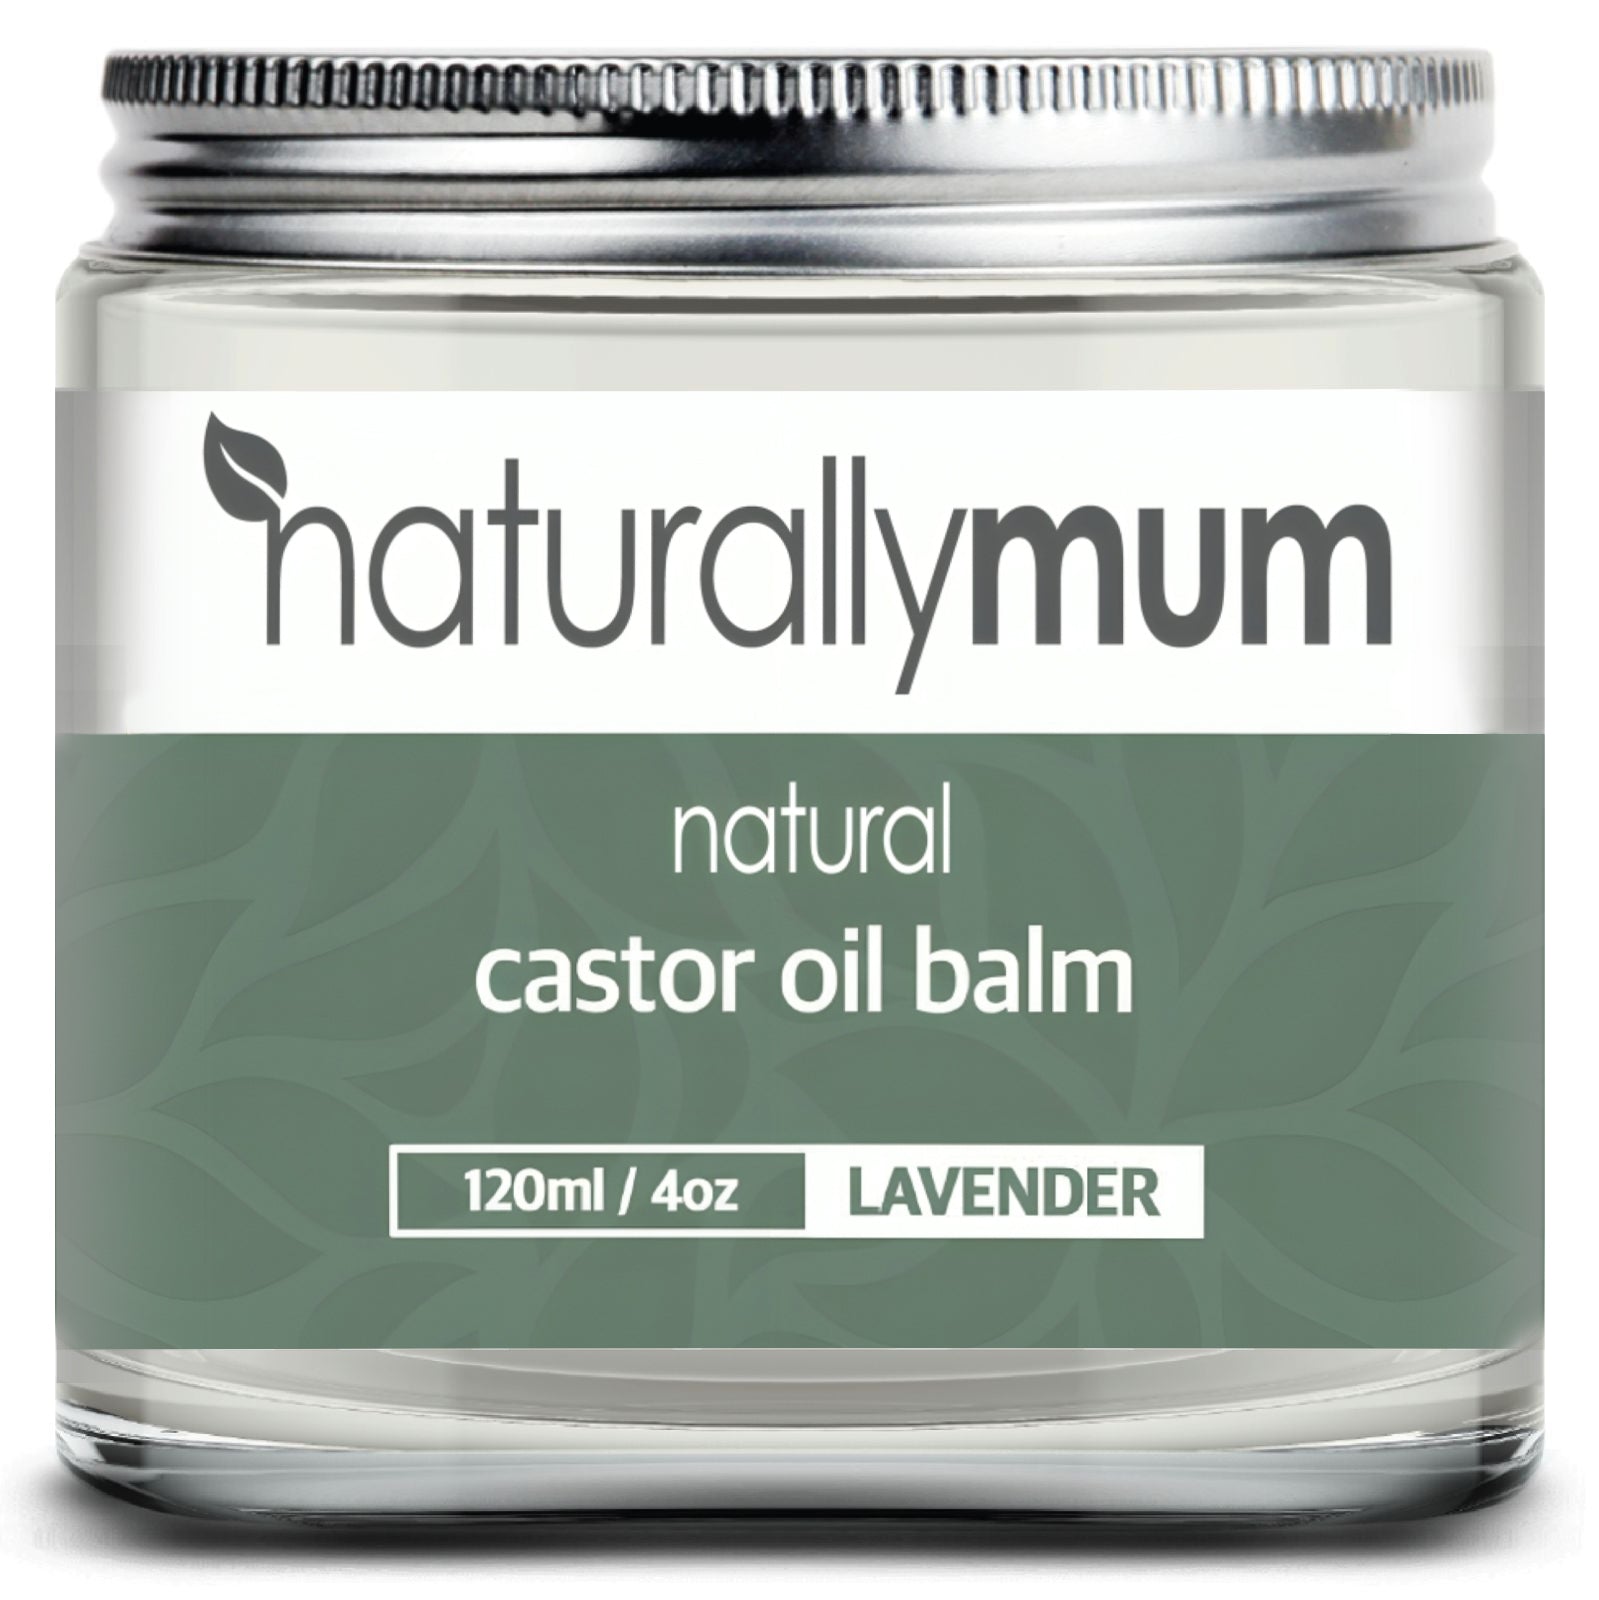 NaturallyMum Cold Pressed Castor Oil Balm | Lavender | 120ml